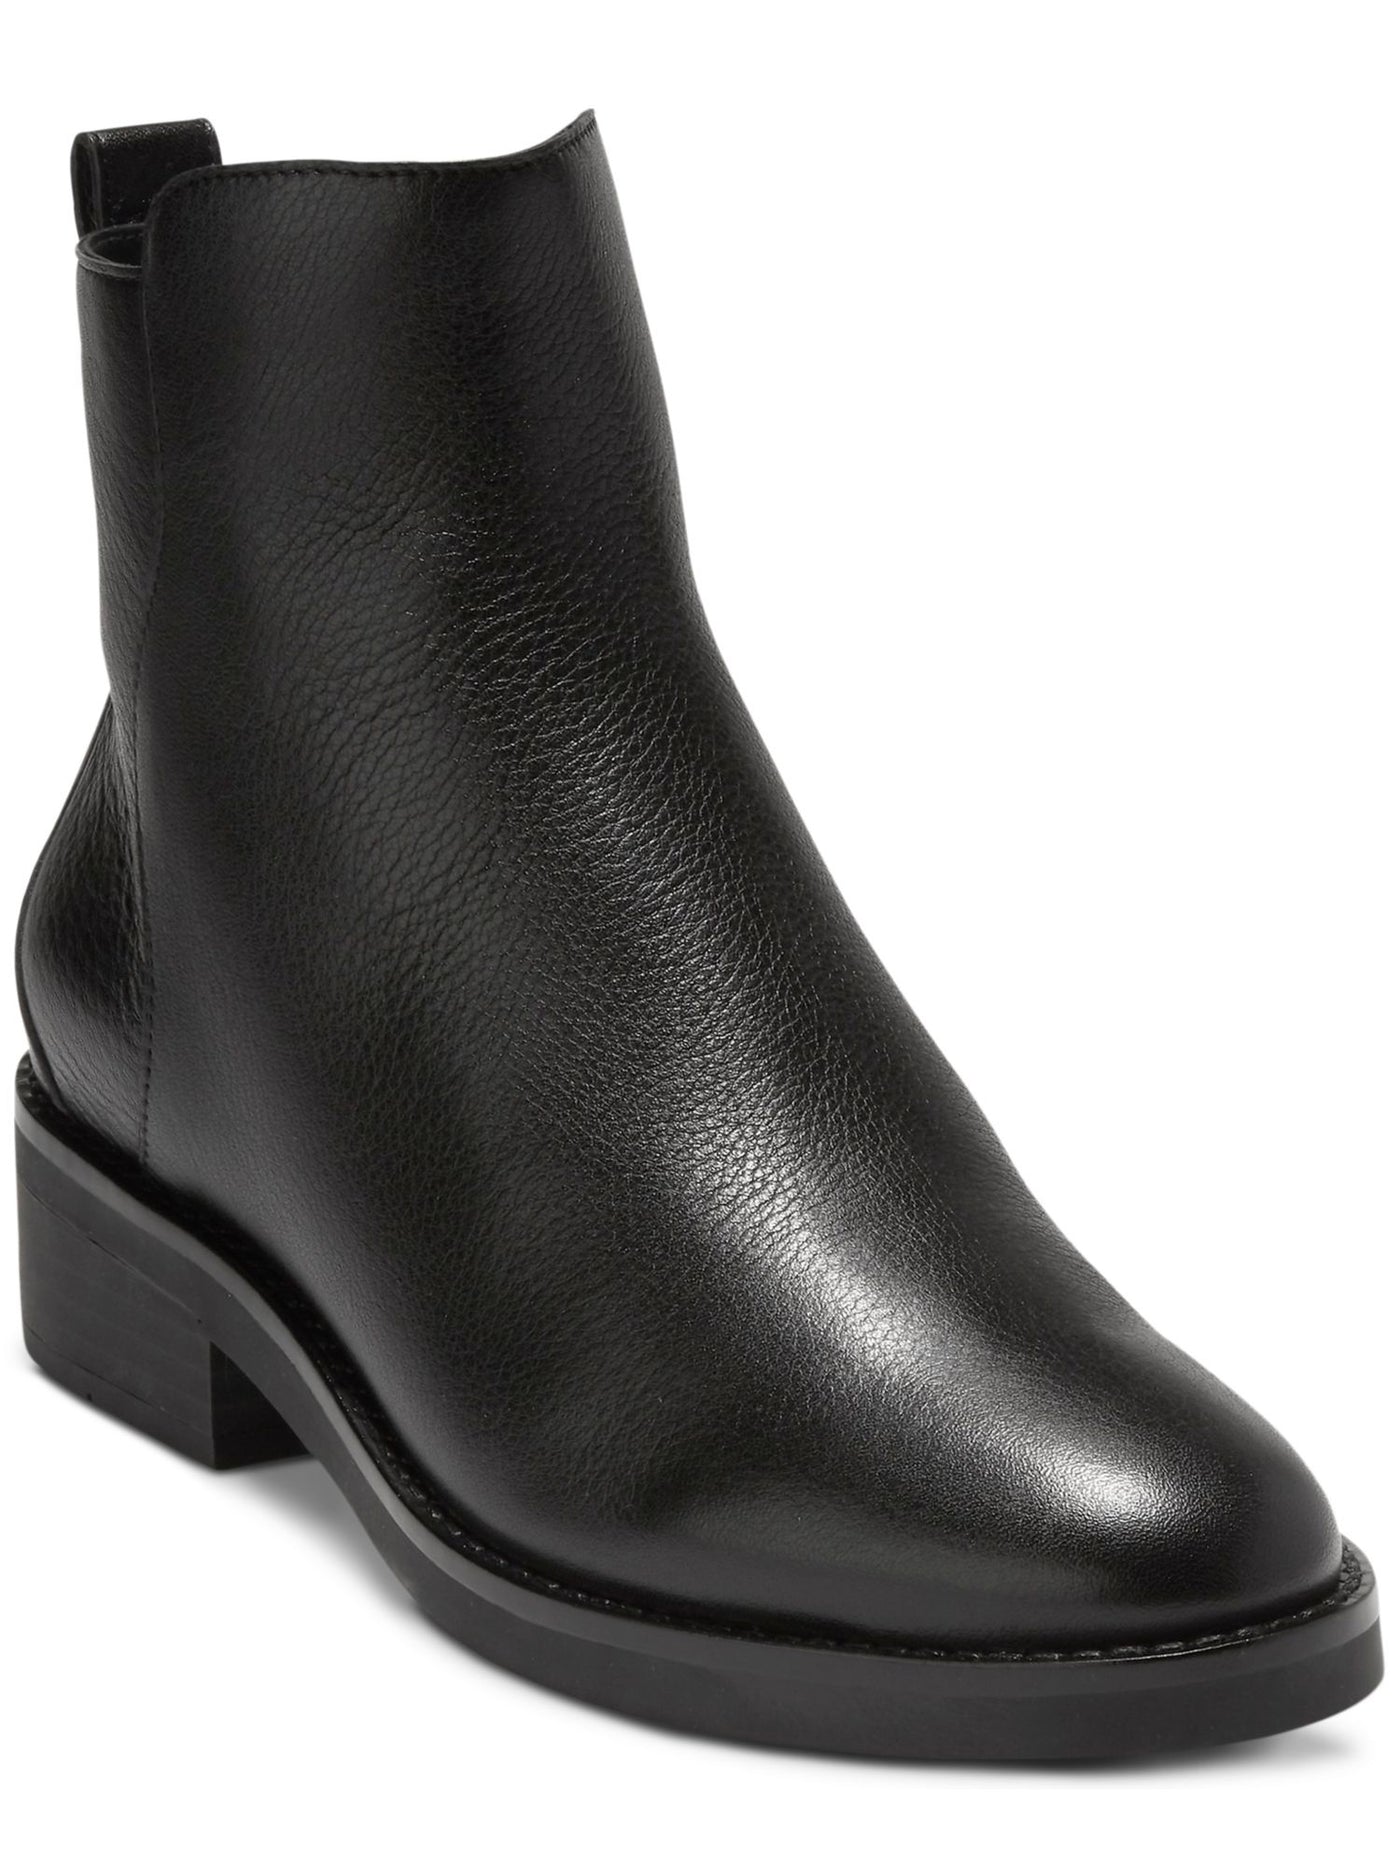 COLE HAAN Womens Black Padded River Almond Toe Block Heel Zip-Up Leather Booties 7.5 B